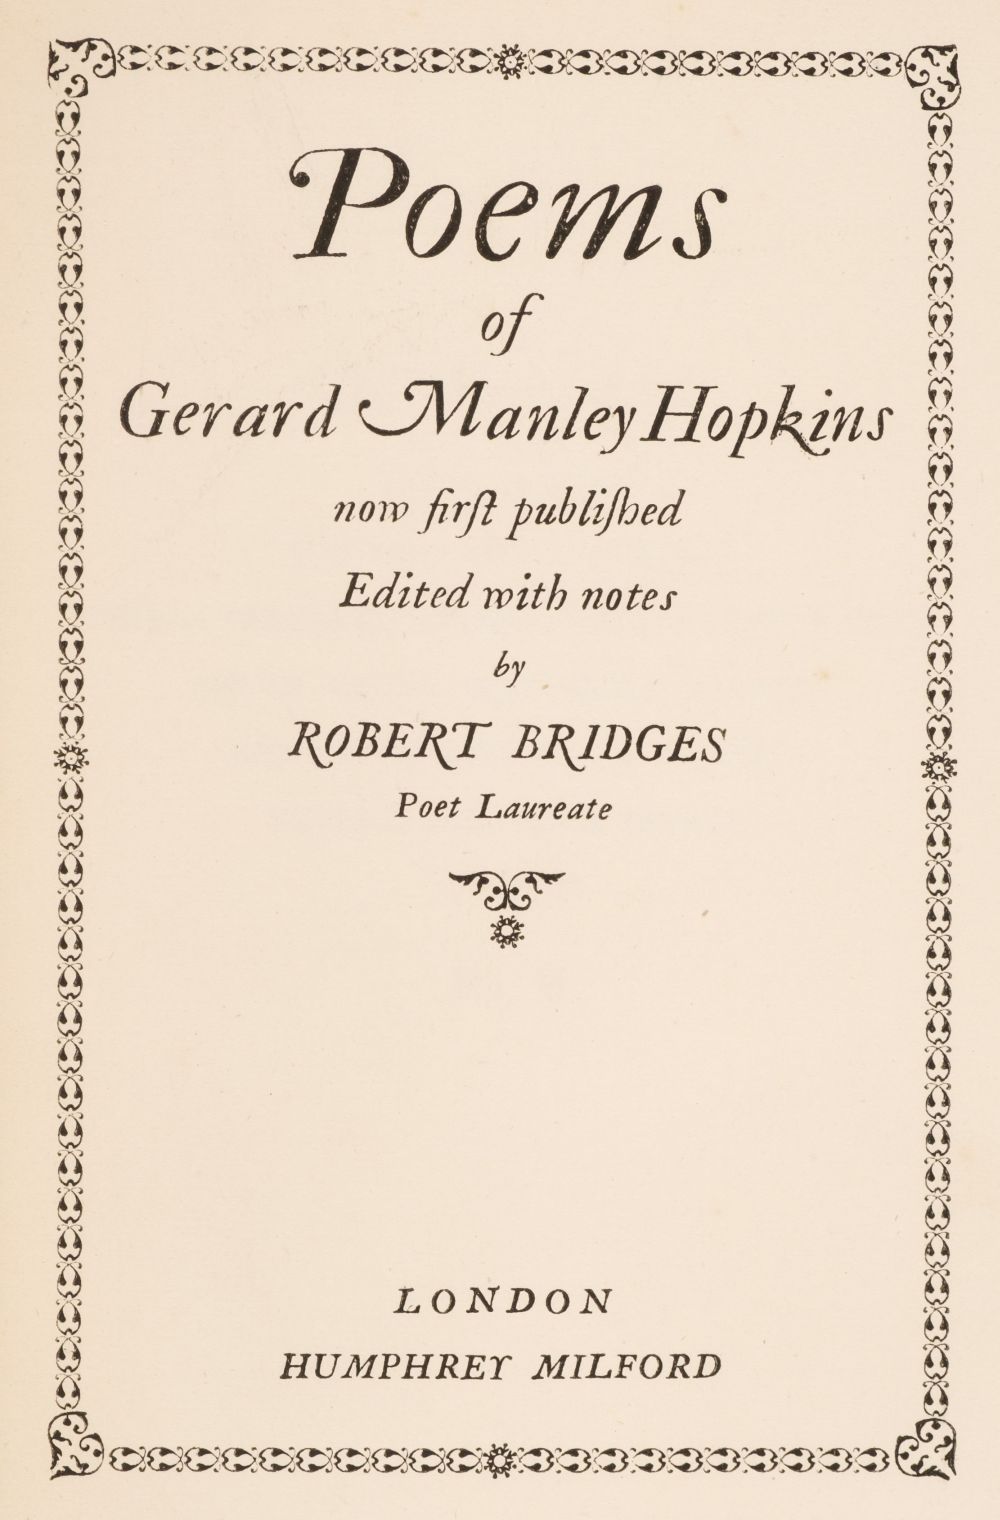 Lot 892 - Hopkins (Gerard Manley). Poems, edited